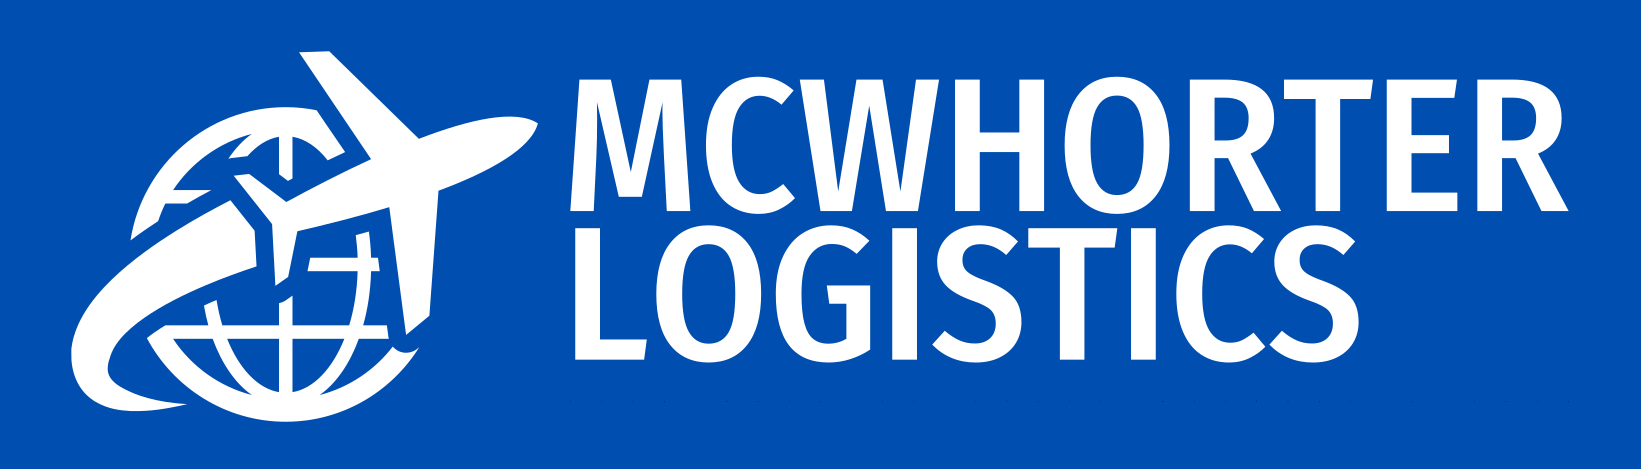 McWhorter Logistics Logo